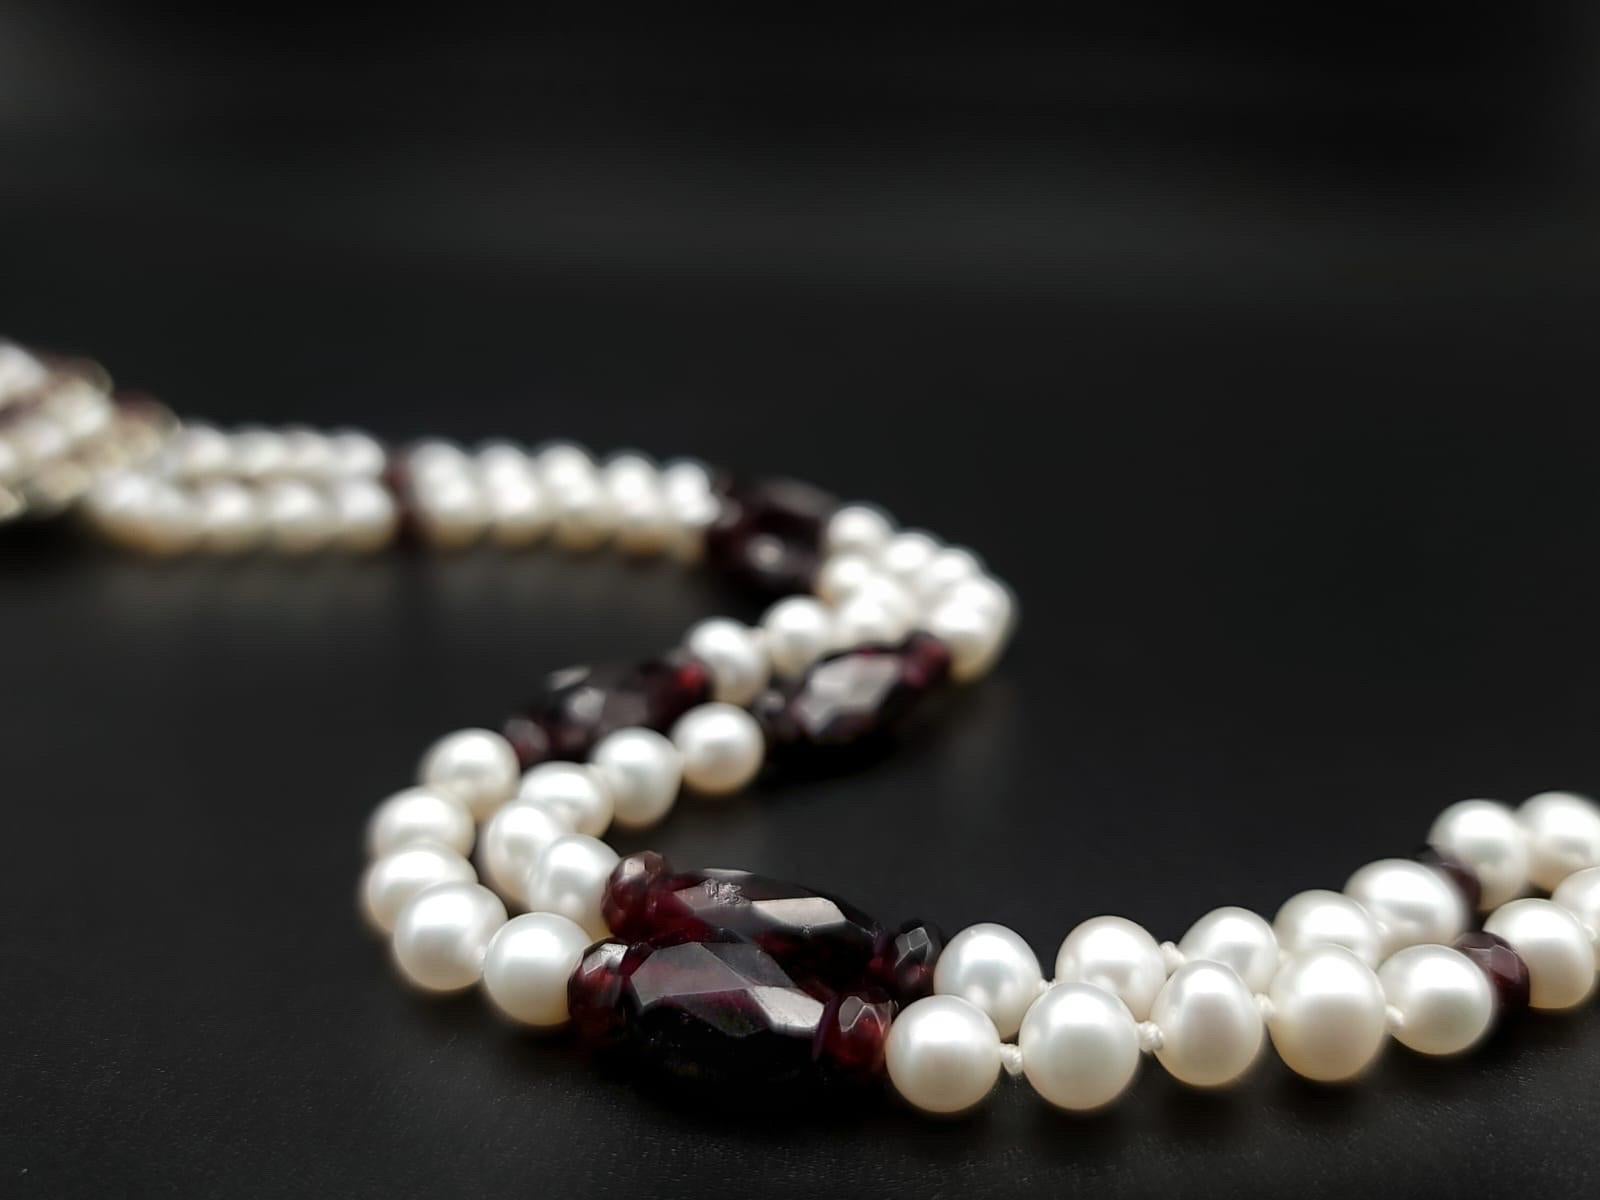 Mixed Cut A.Jeschel Stunning Garnet and Pearl Cross Long Necklace. For Sale